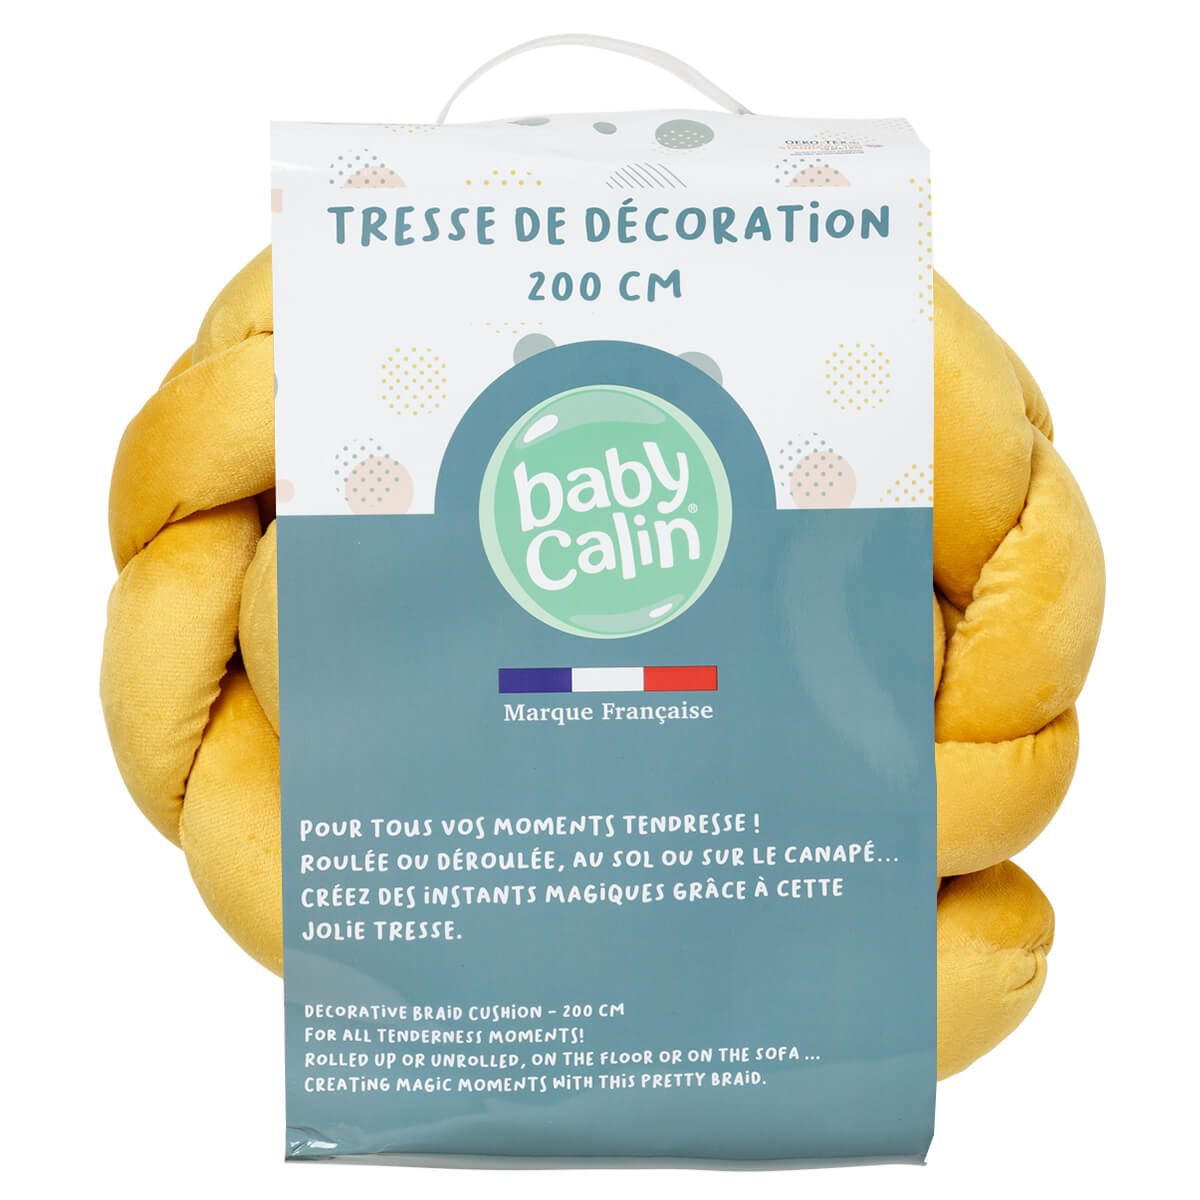 Tresse de décoration 200 cm - Curry Babycalin - BB Malin